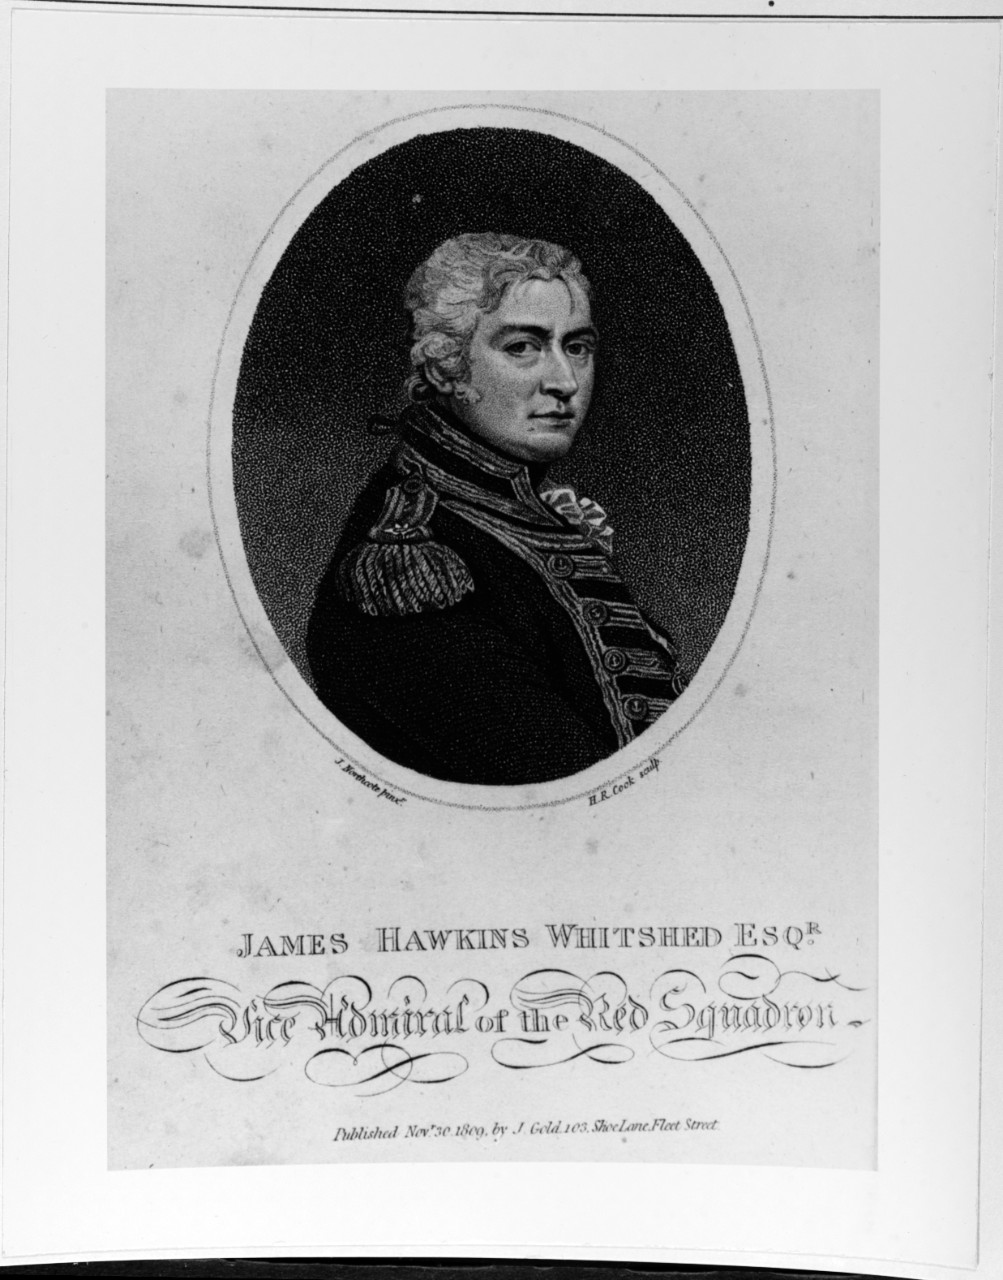 James Hawkins Whitshed (1762-1849), British Admiral.